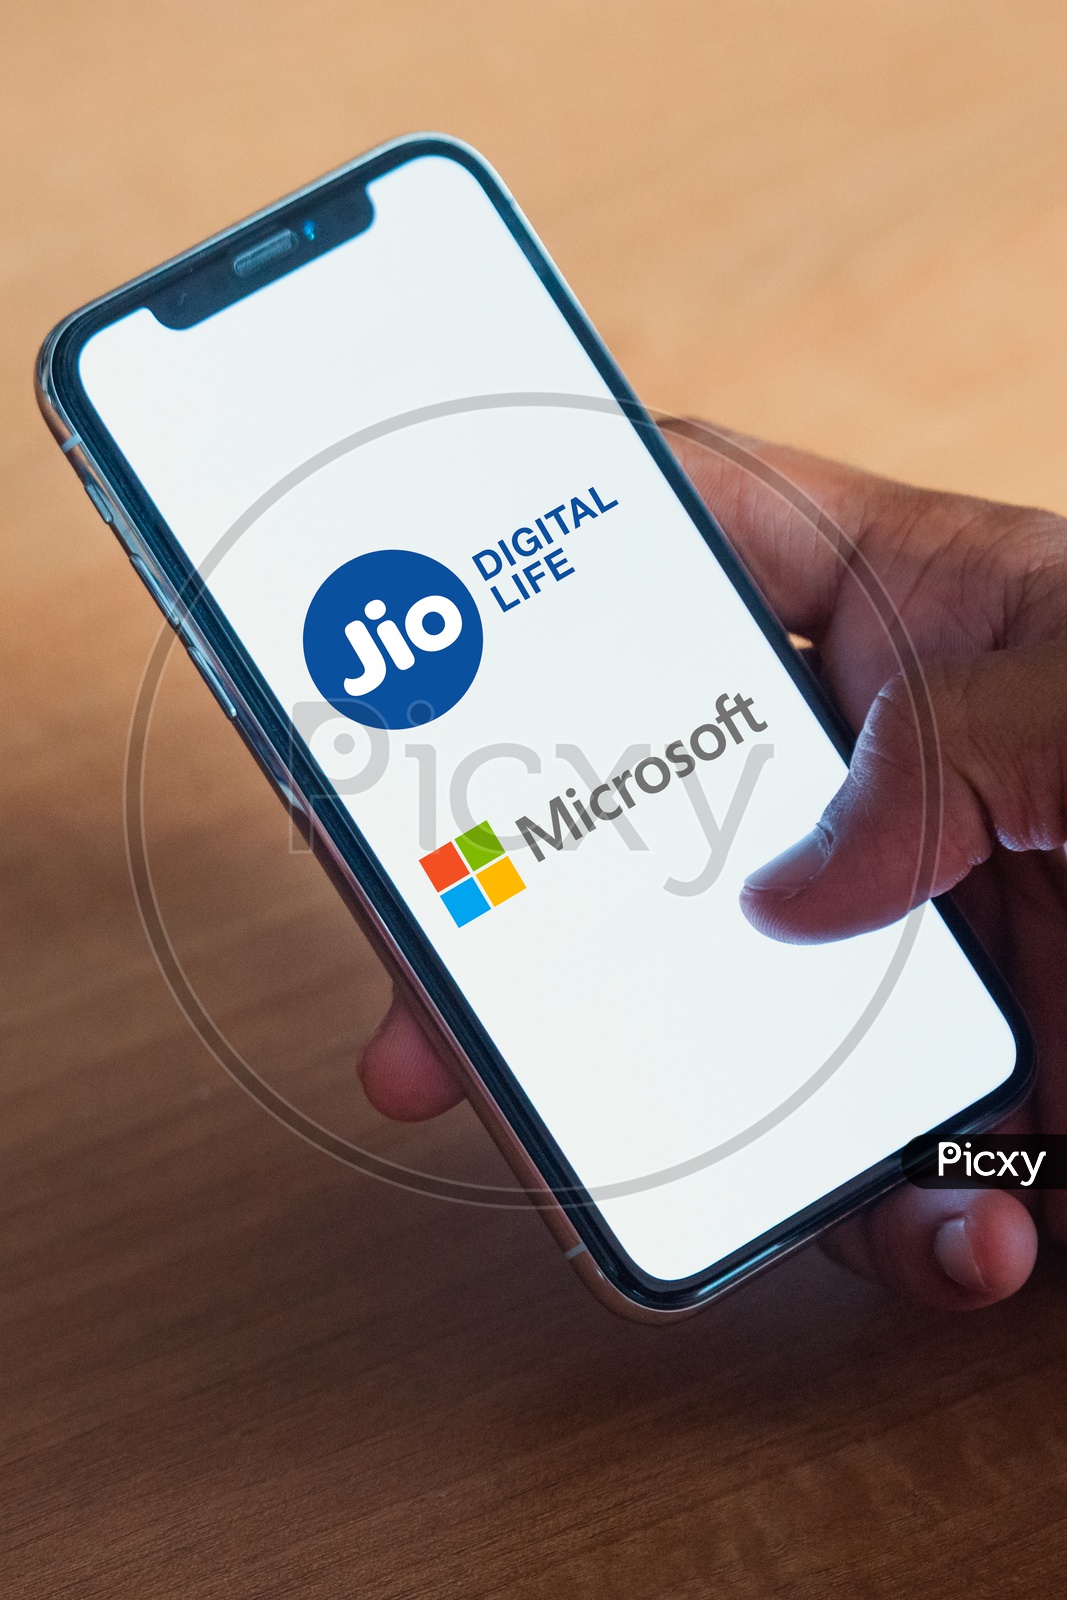 Reliance Jio Digital Life and Microsoft MOU Partnership